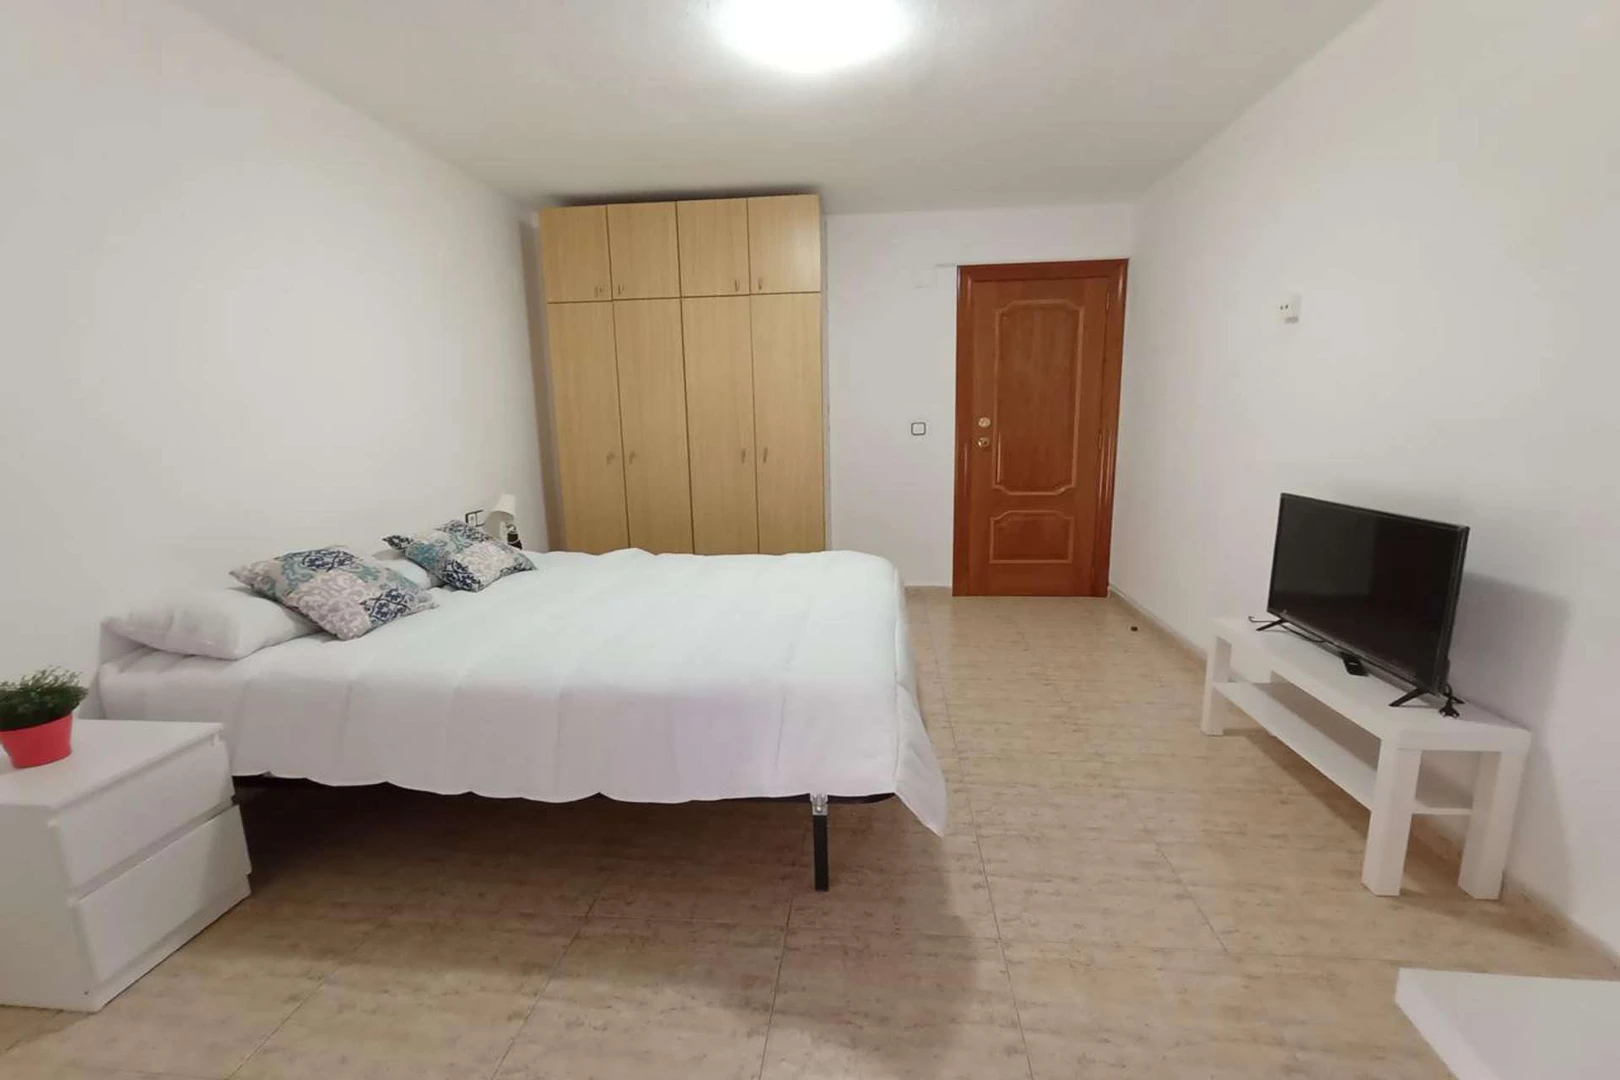 Cheap shared room in burjassot